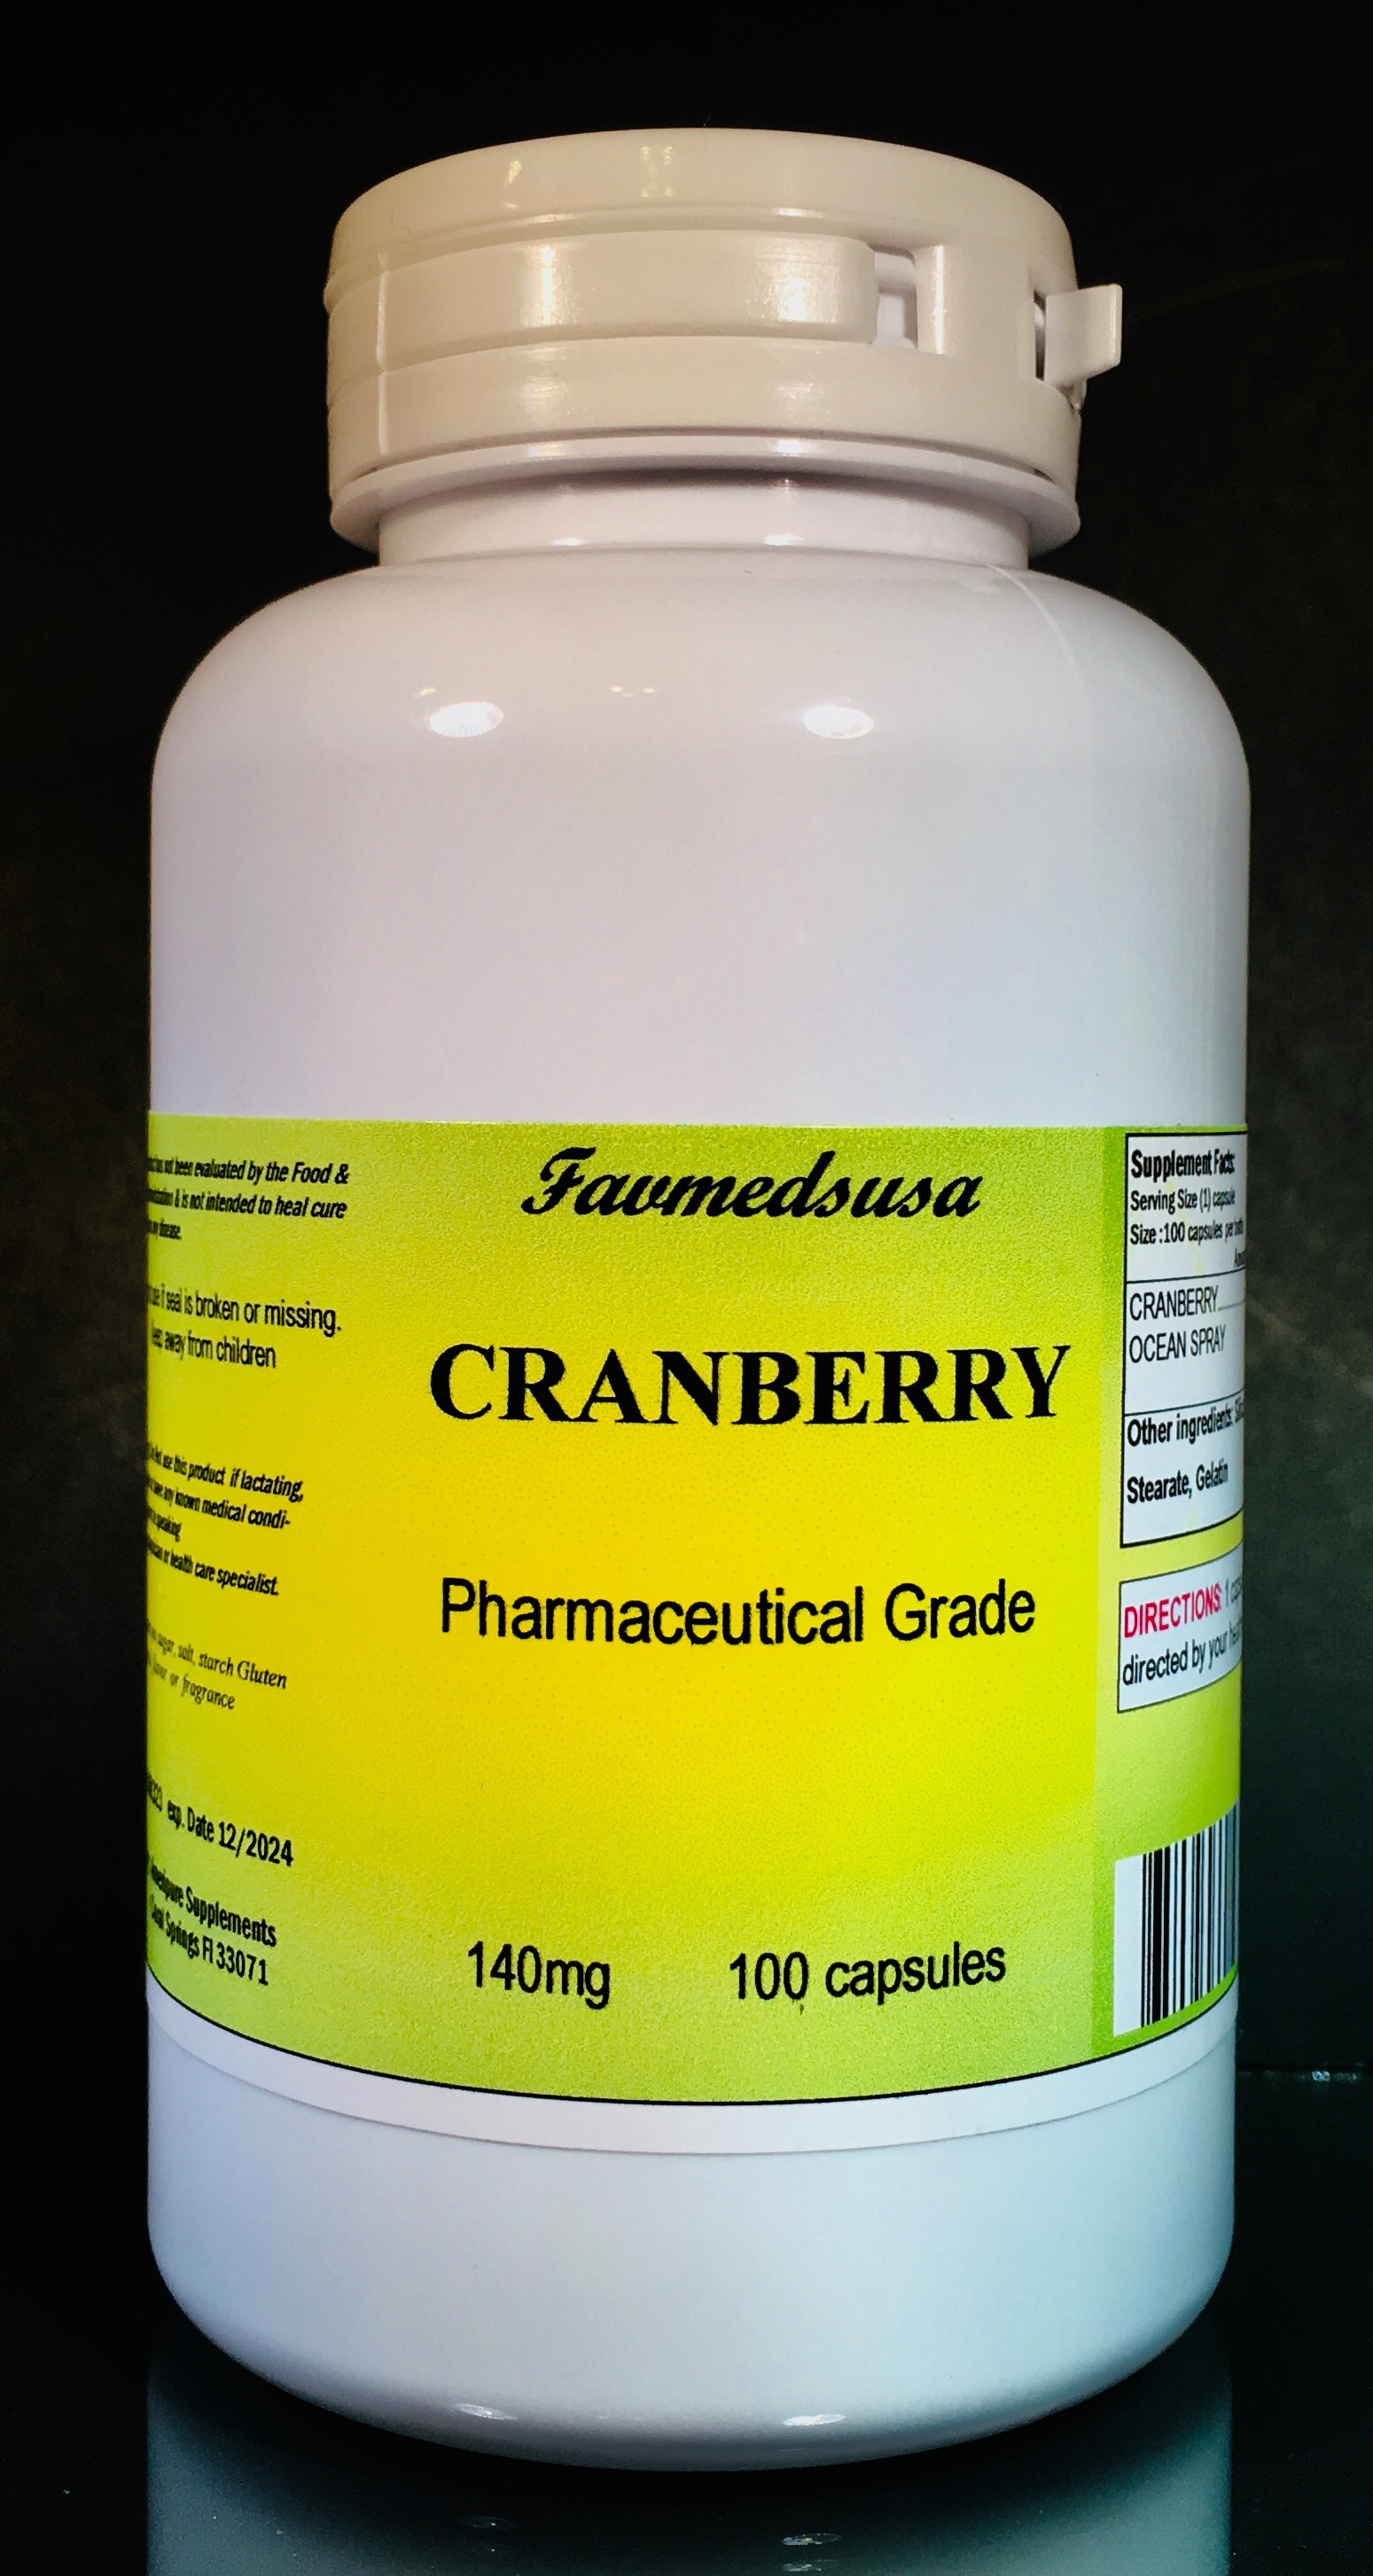 Cranberry Extract - 100 capsules